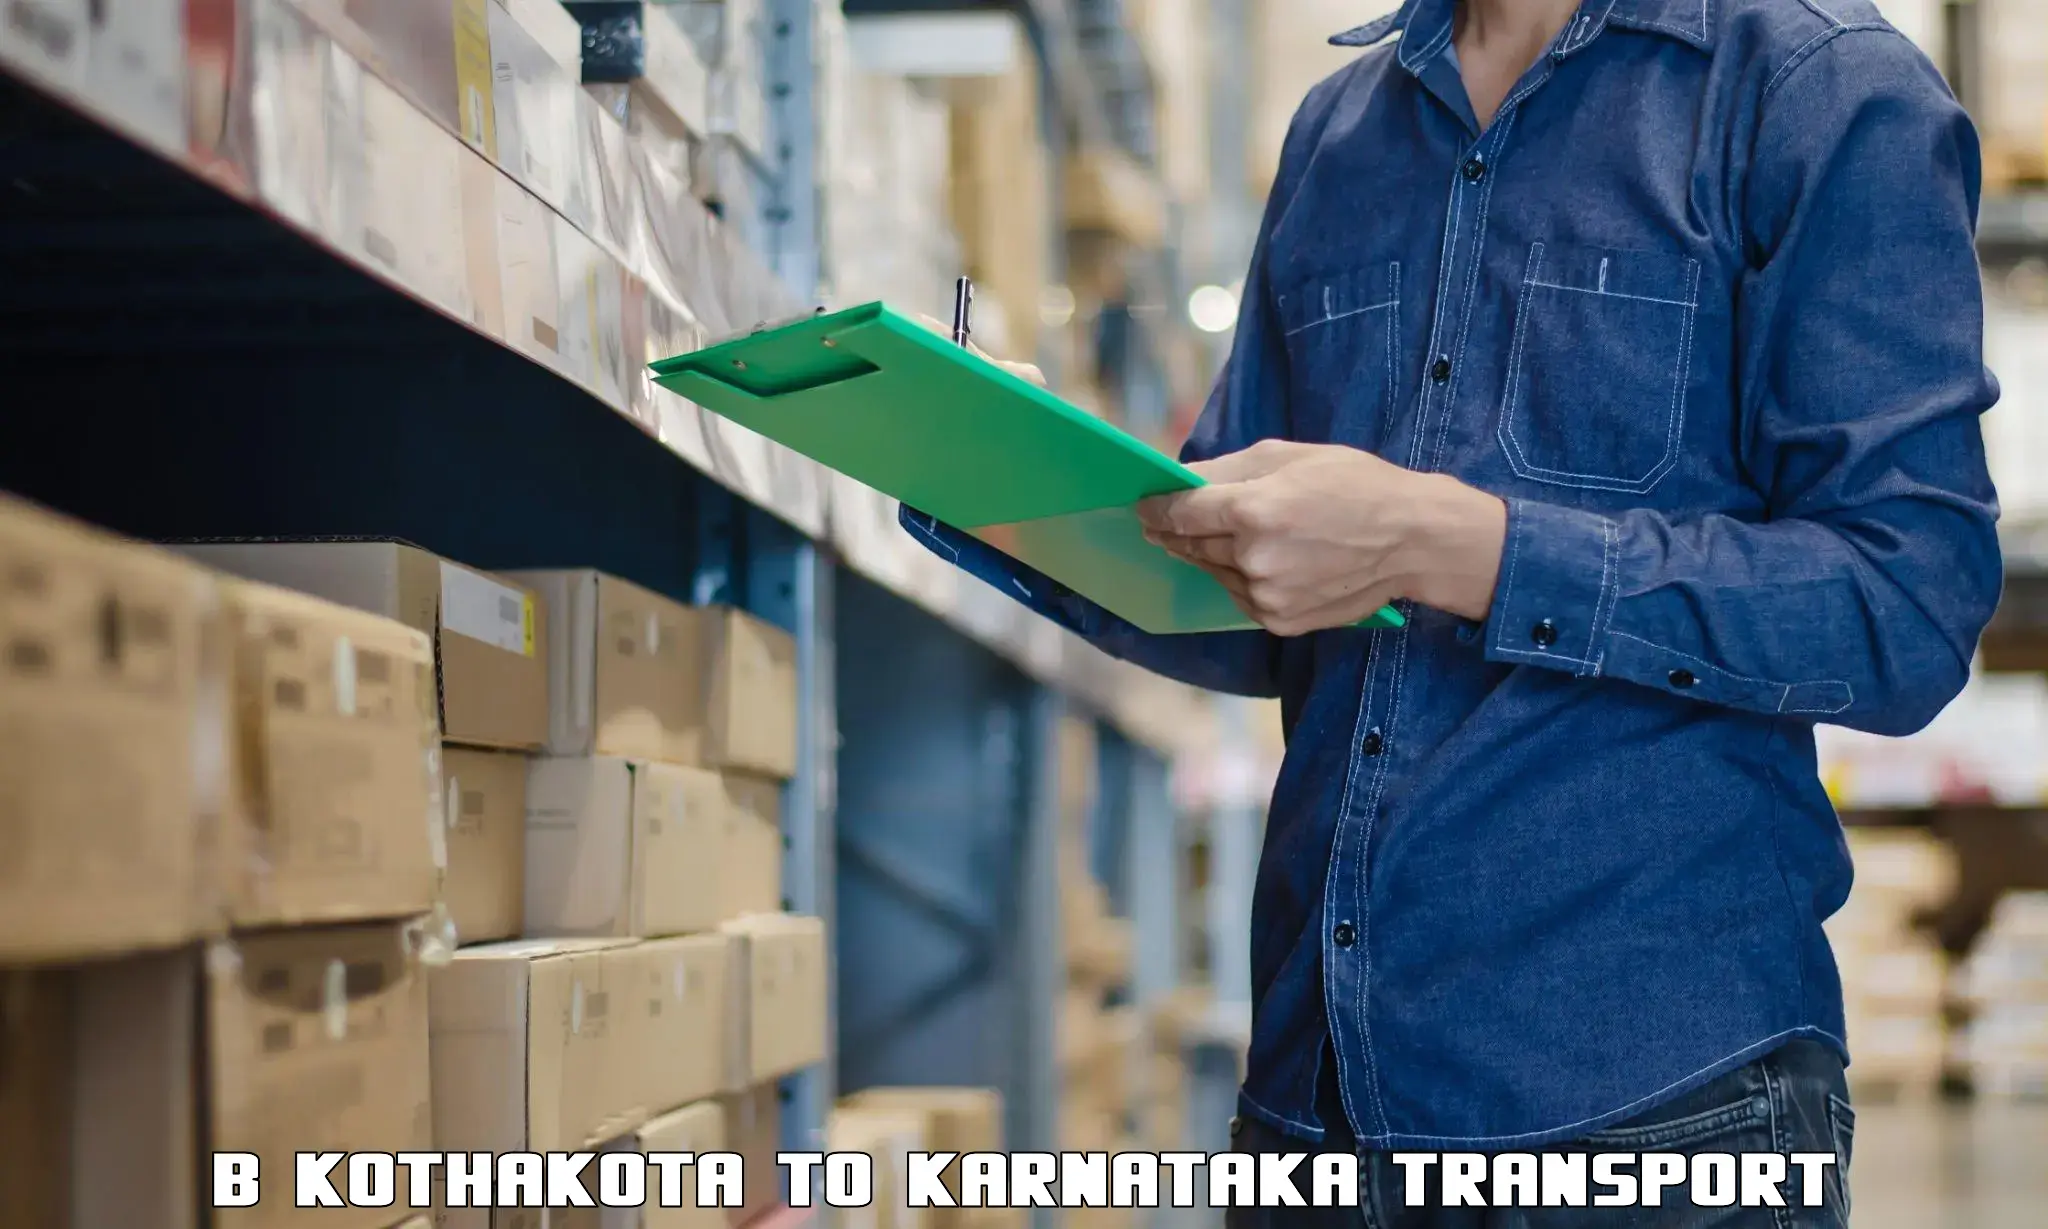 Parcel transport services B Kothakota to Bangalore